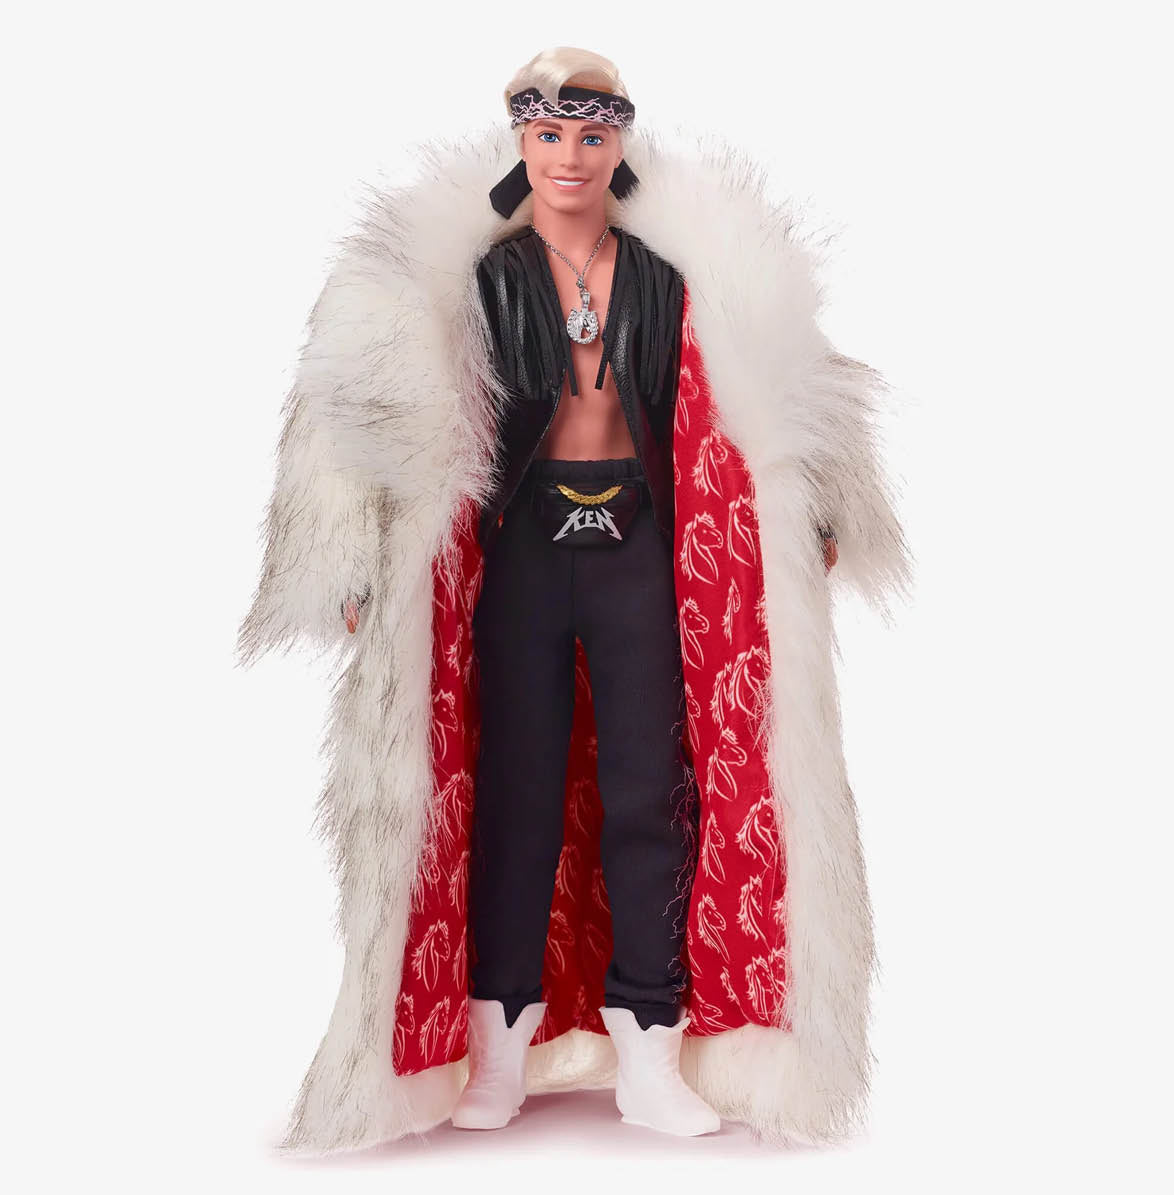 Ken Doll In Faux Fur Coat And Black Fringe Vest – Barbie The Movie Standing